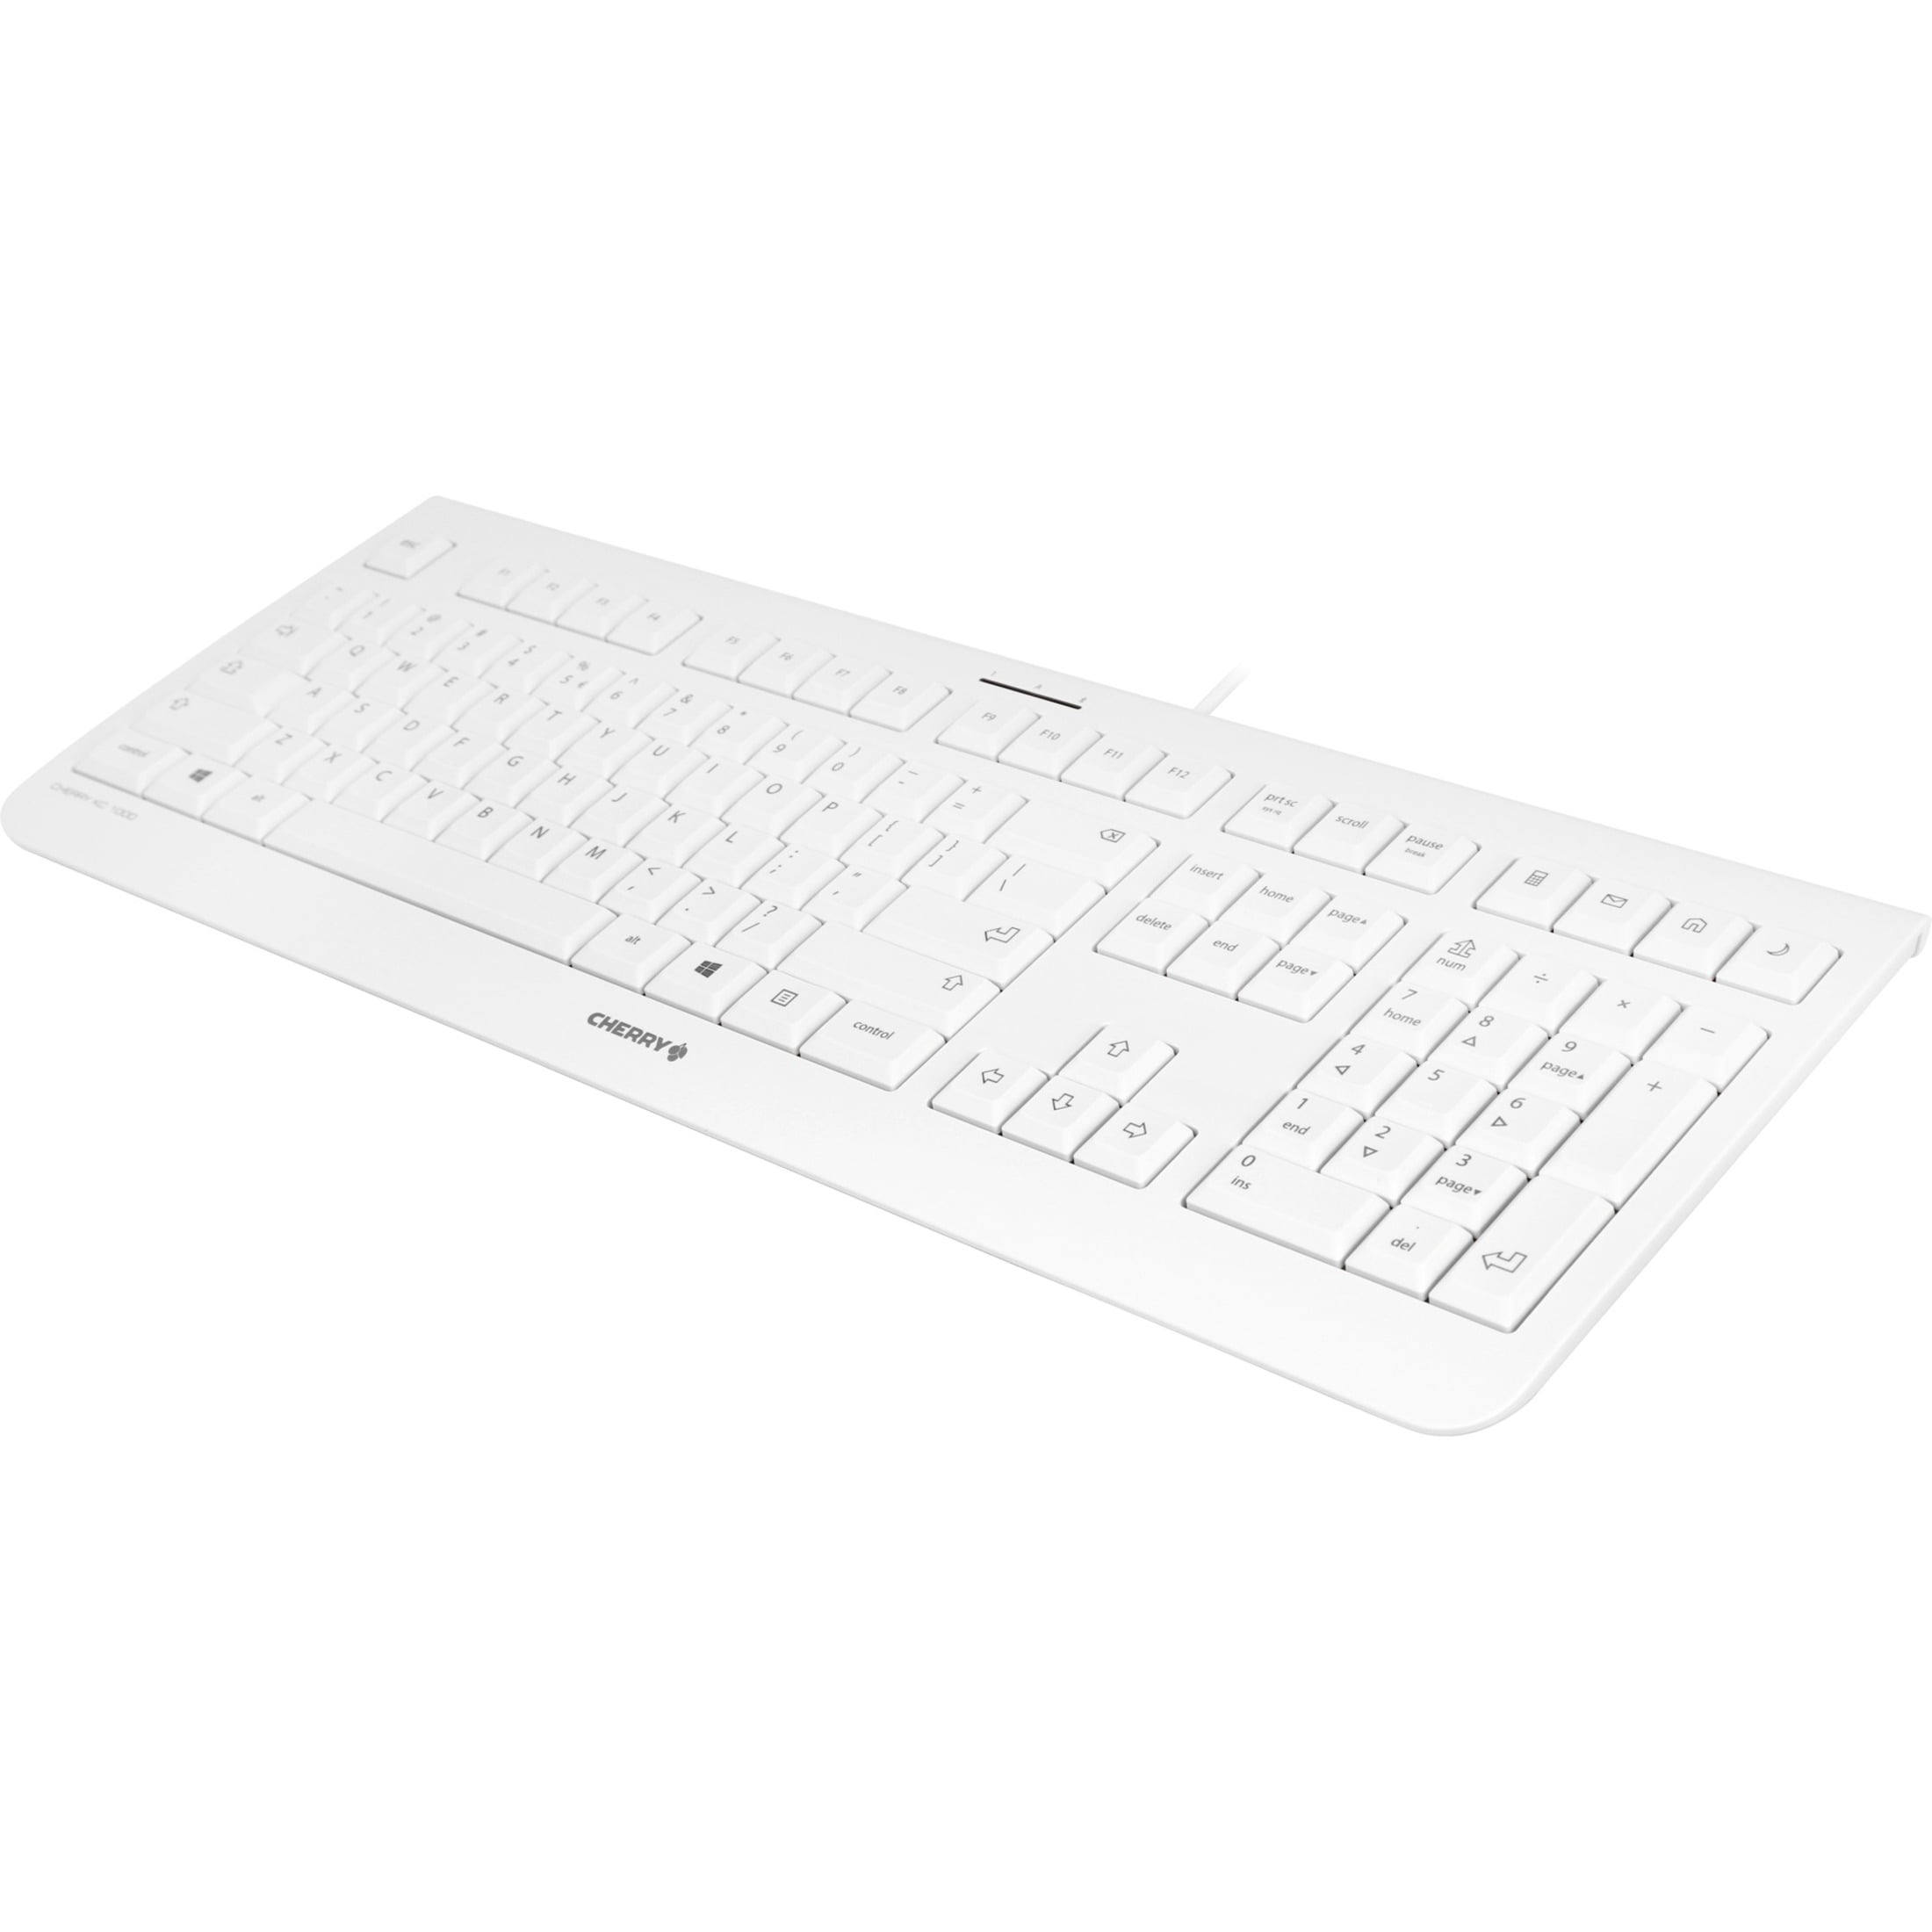 CHERRY KC 1000 Keyboard | Mechanische Tastaturen